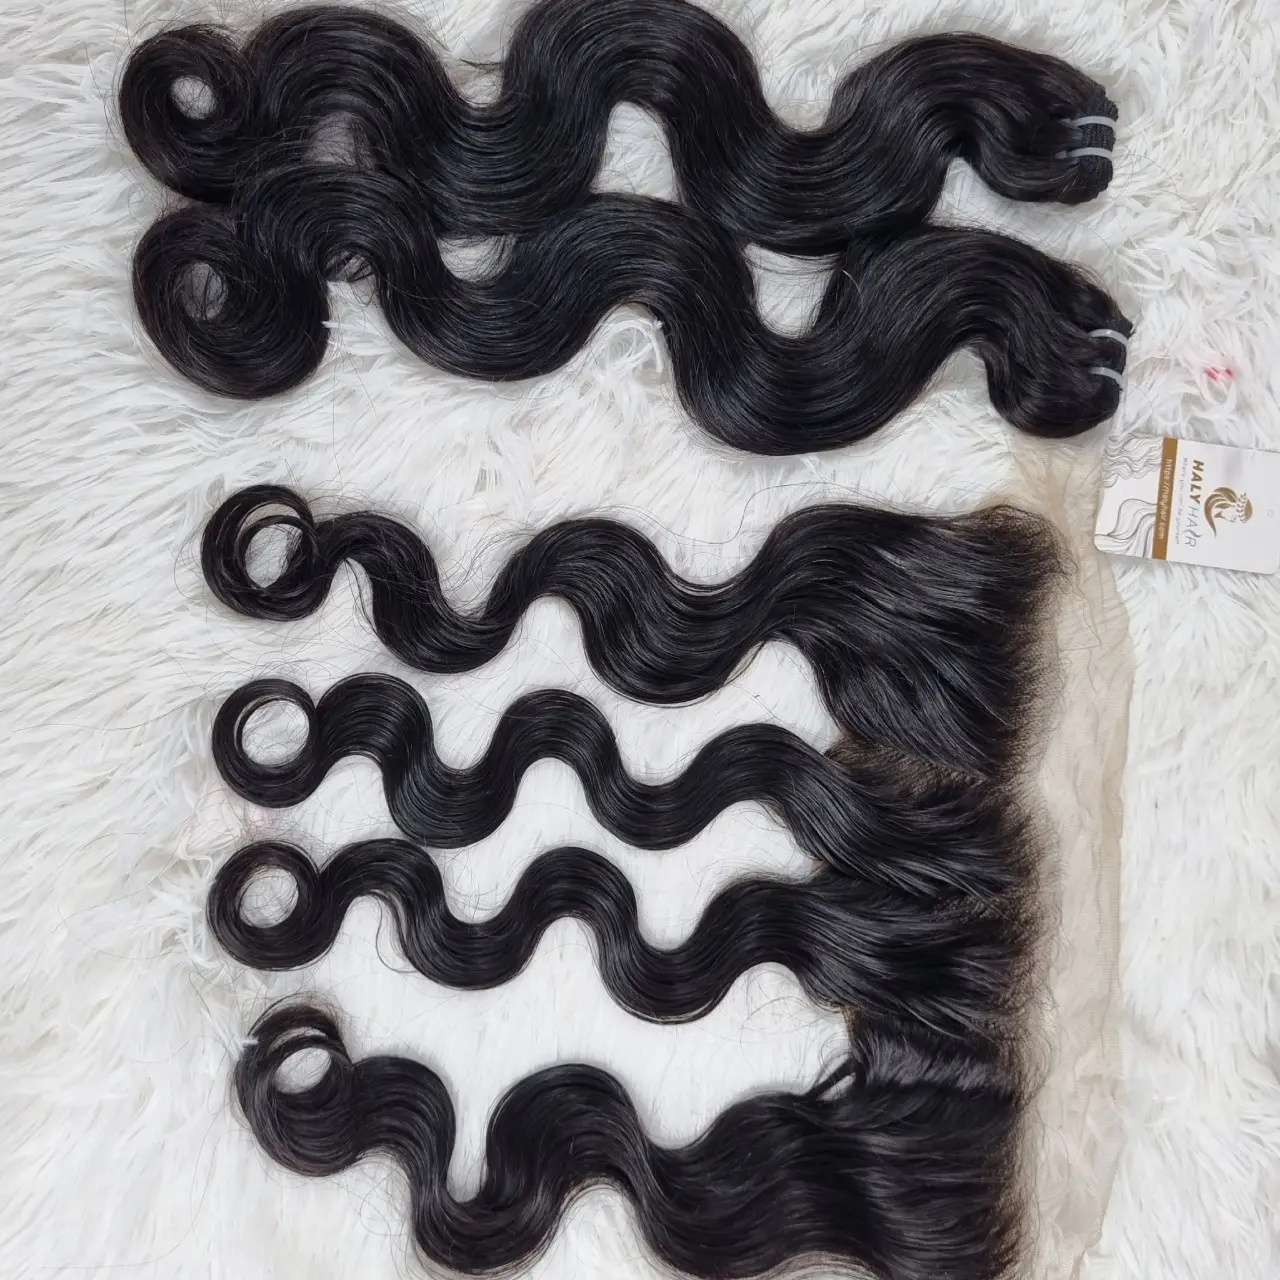 Frontal body wavy human hair extension with 100% raw virgin hair from Halyhair Vietnam hair supplier genius weft